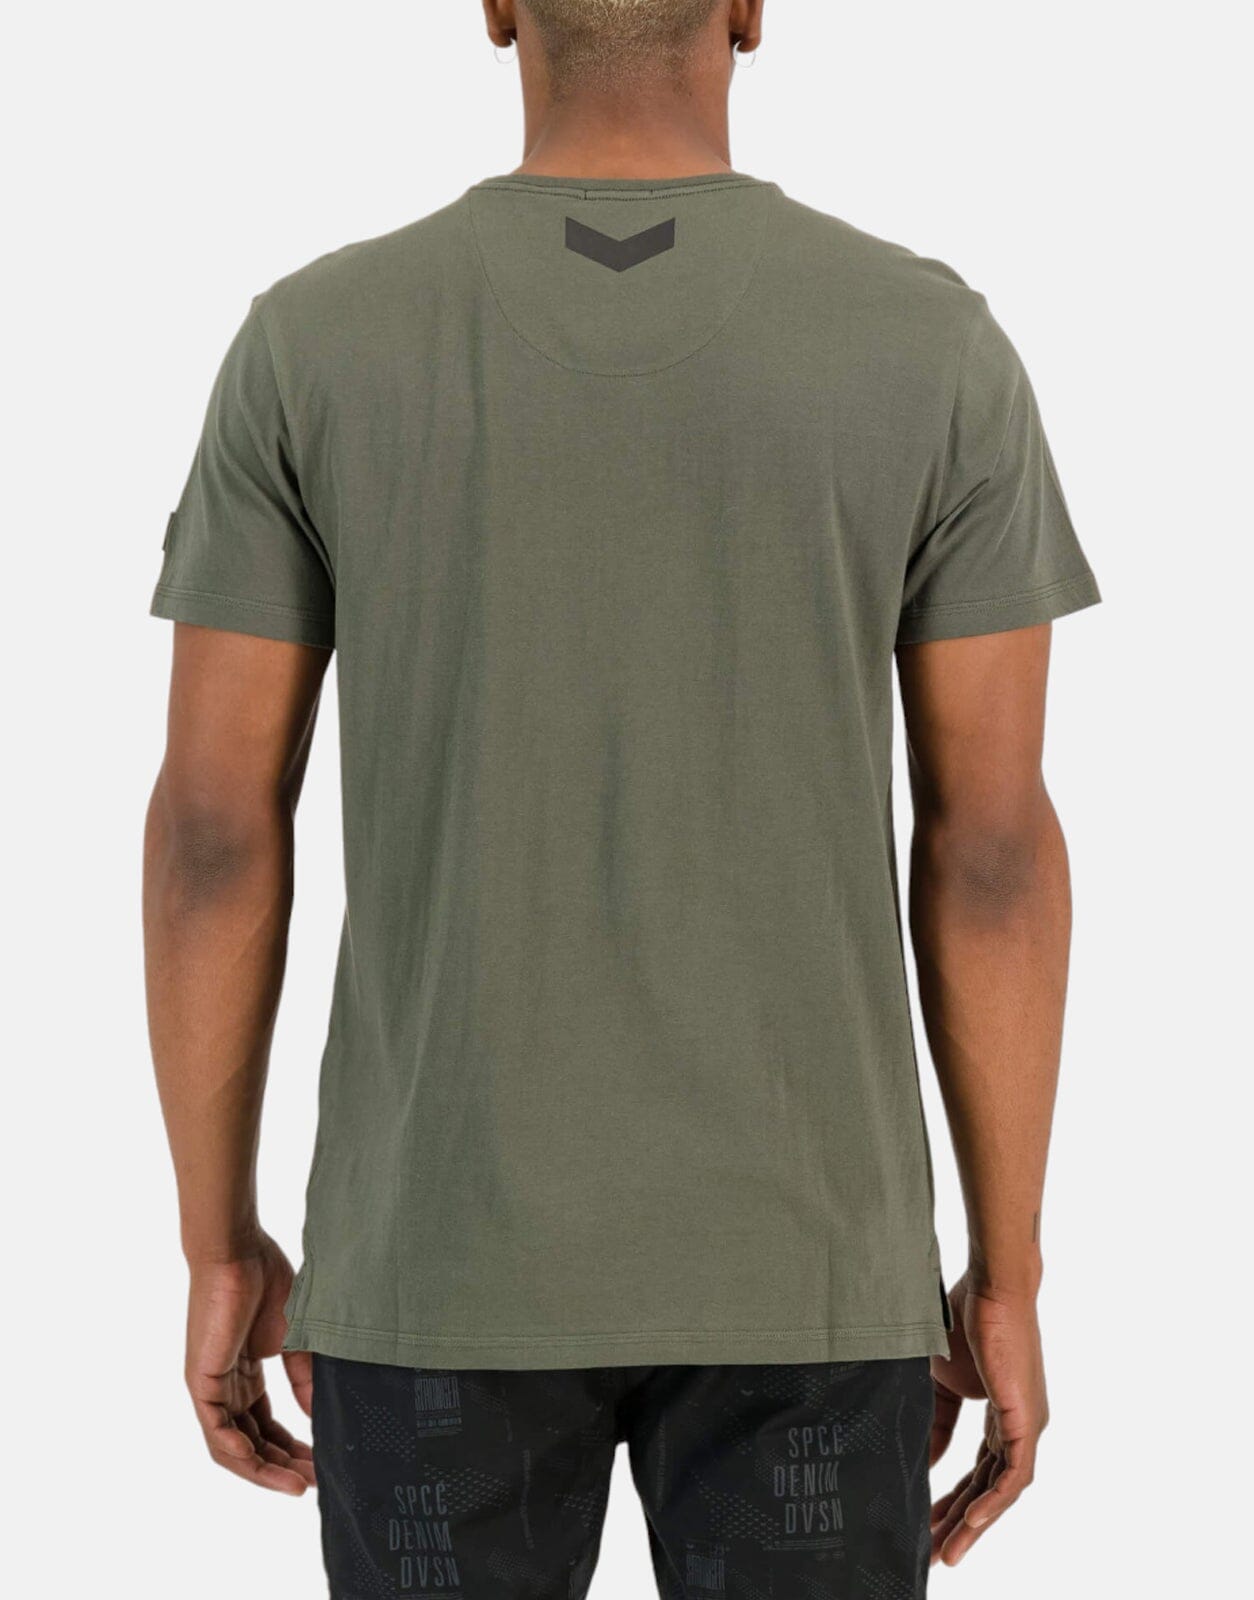 SPCC Brock T-Shirt Light Green - Subwear